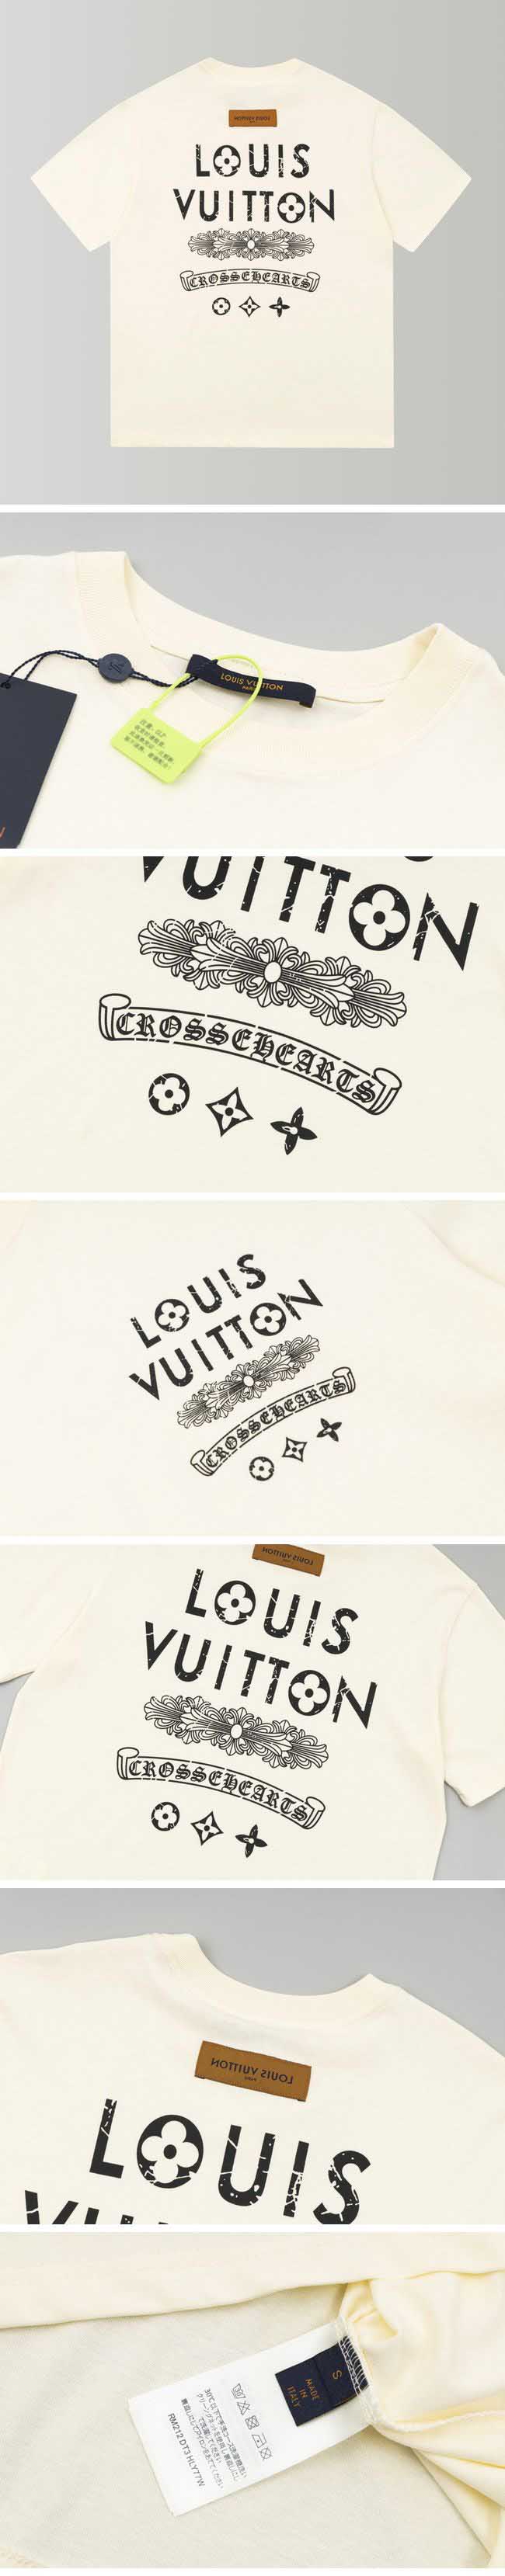 Louis Vuitton x Chrom Heart Tee ルイヴィトン x クロムハーツ Tシャツ